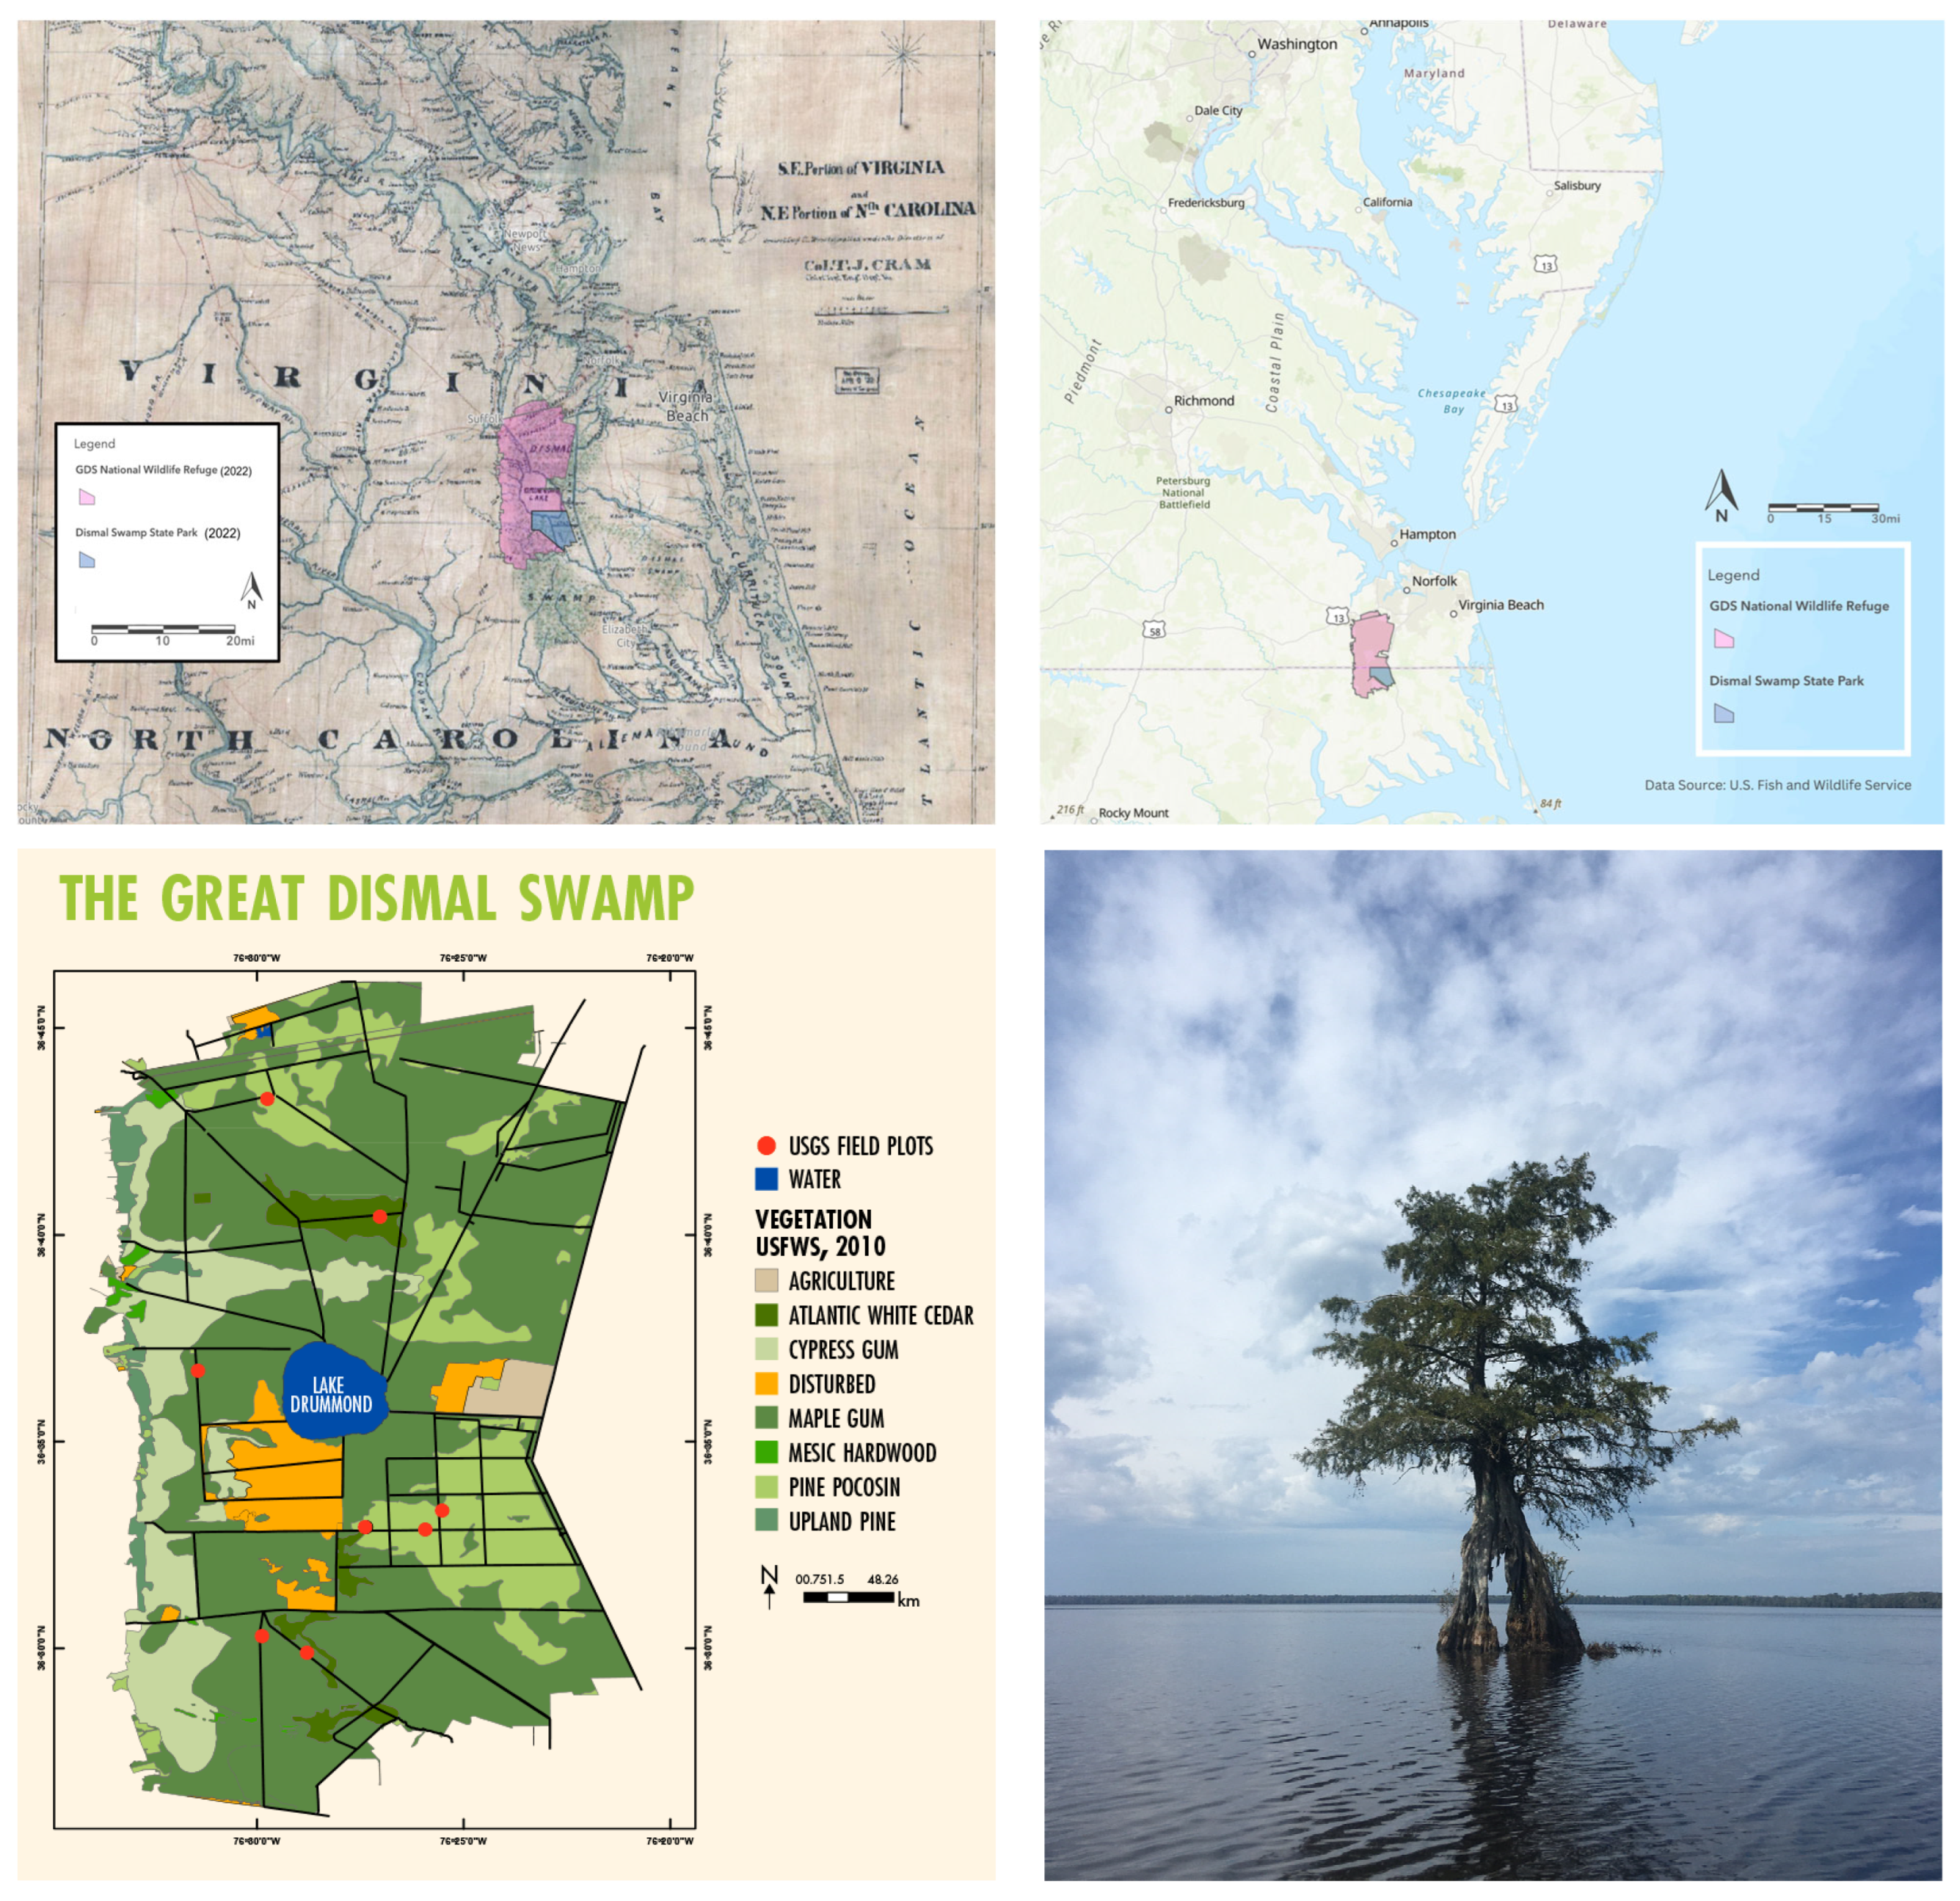 EDITORIAL: Rethink proposed Cherry Creek mega-project, Editorials